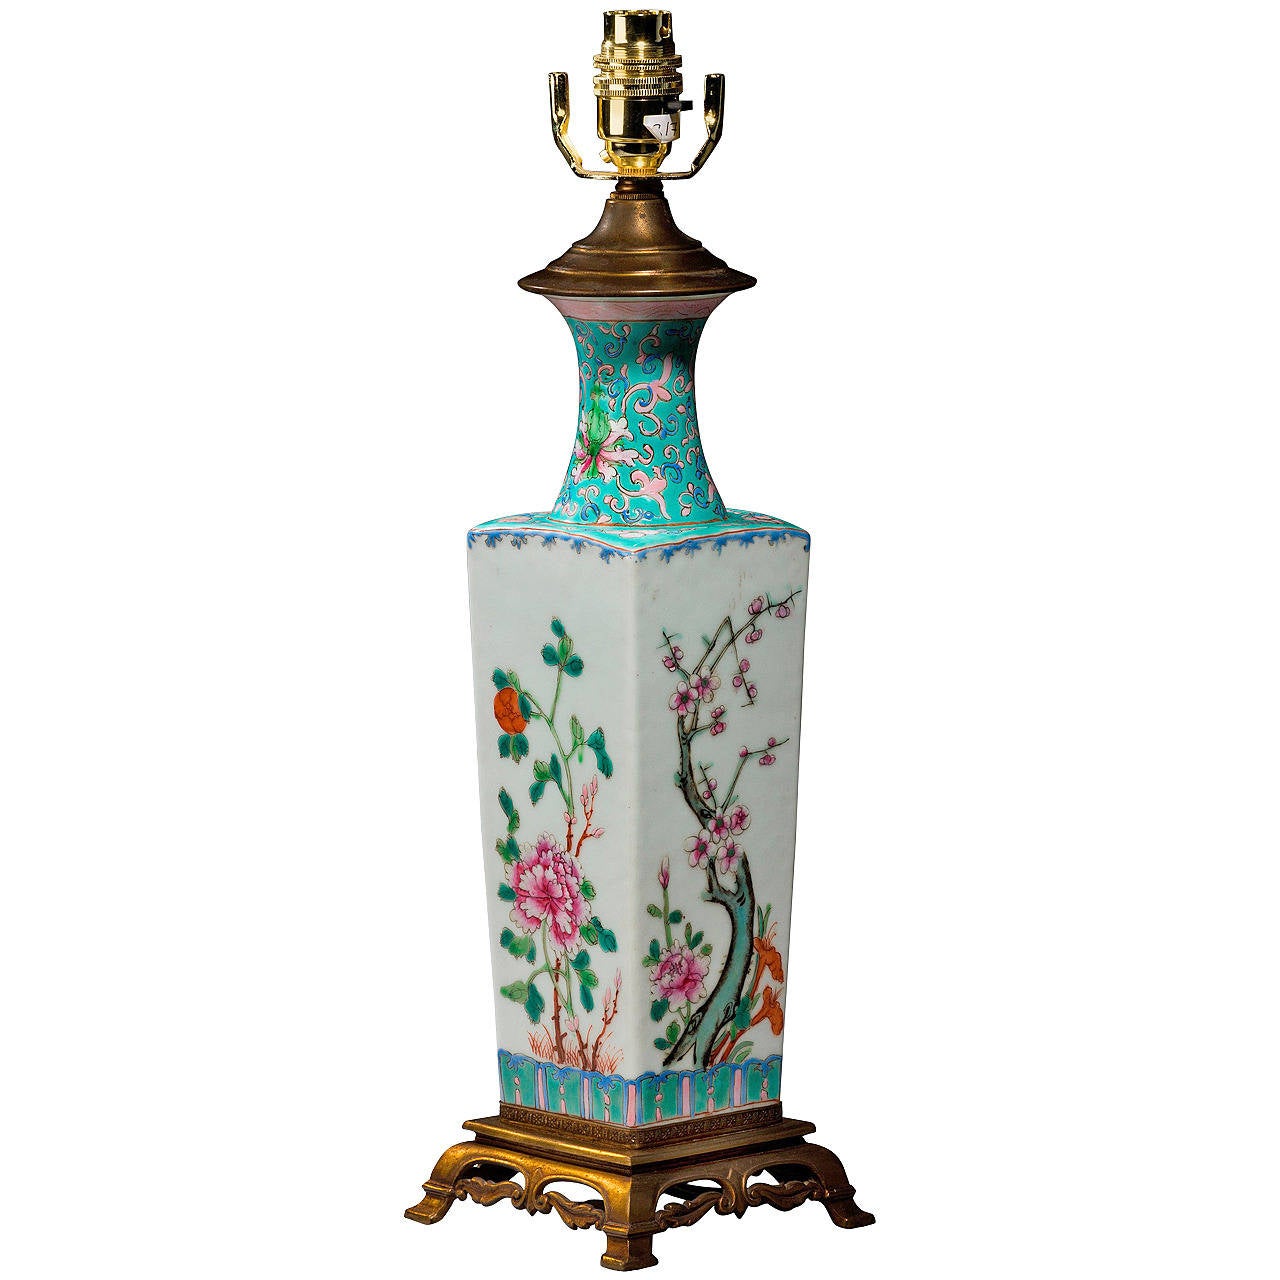 Late 19th century Canton Porcelain Square Vase Lamp